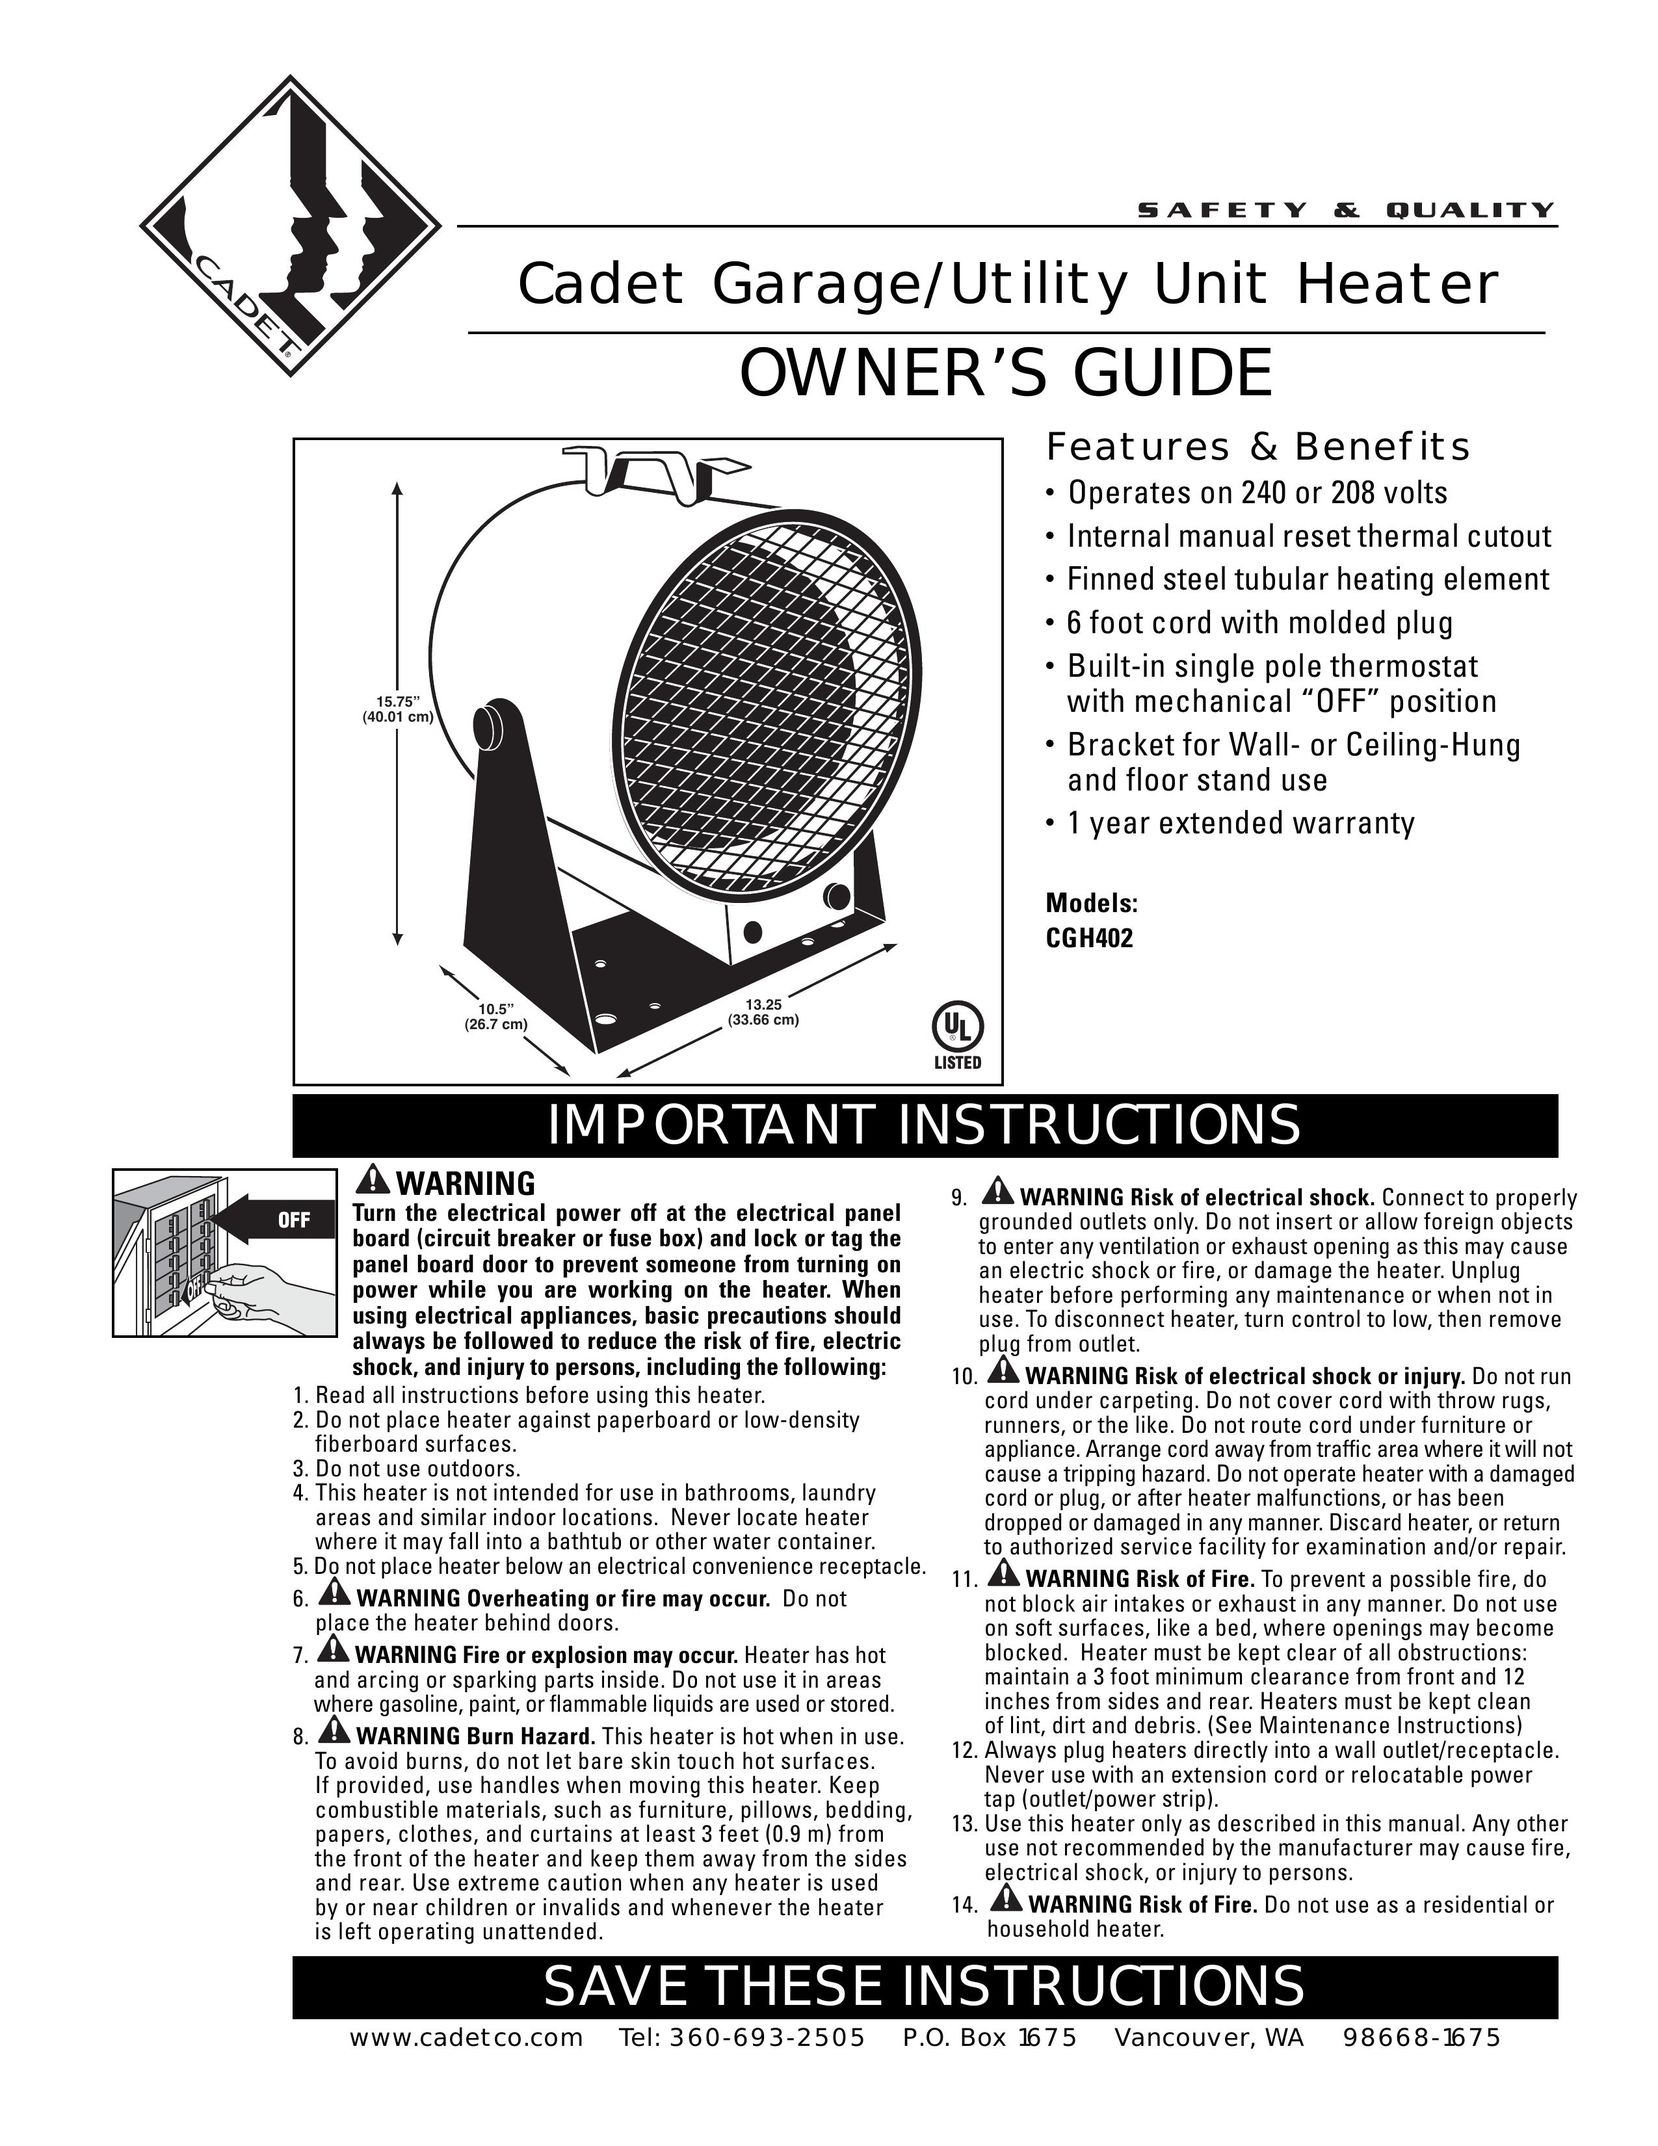 Cadet CGH402 Electric Heater User Manual